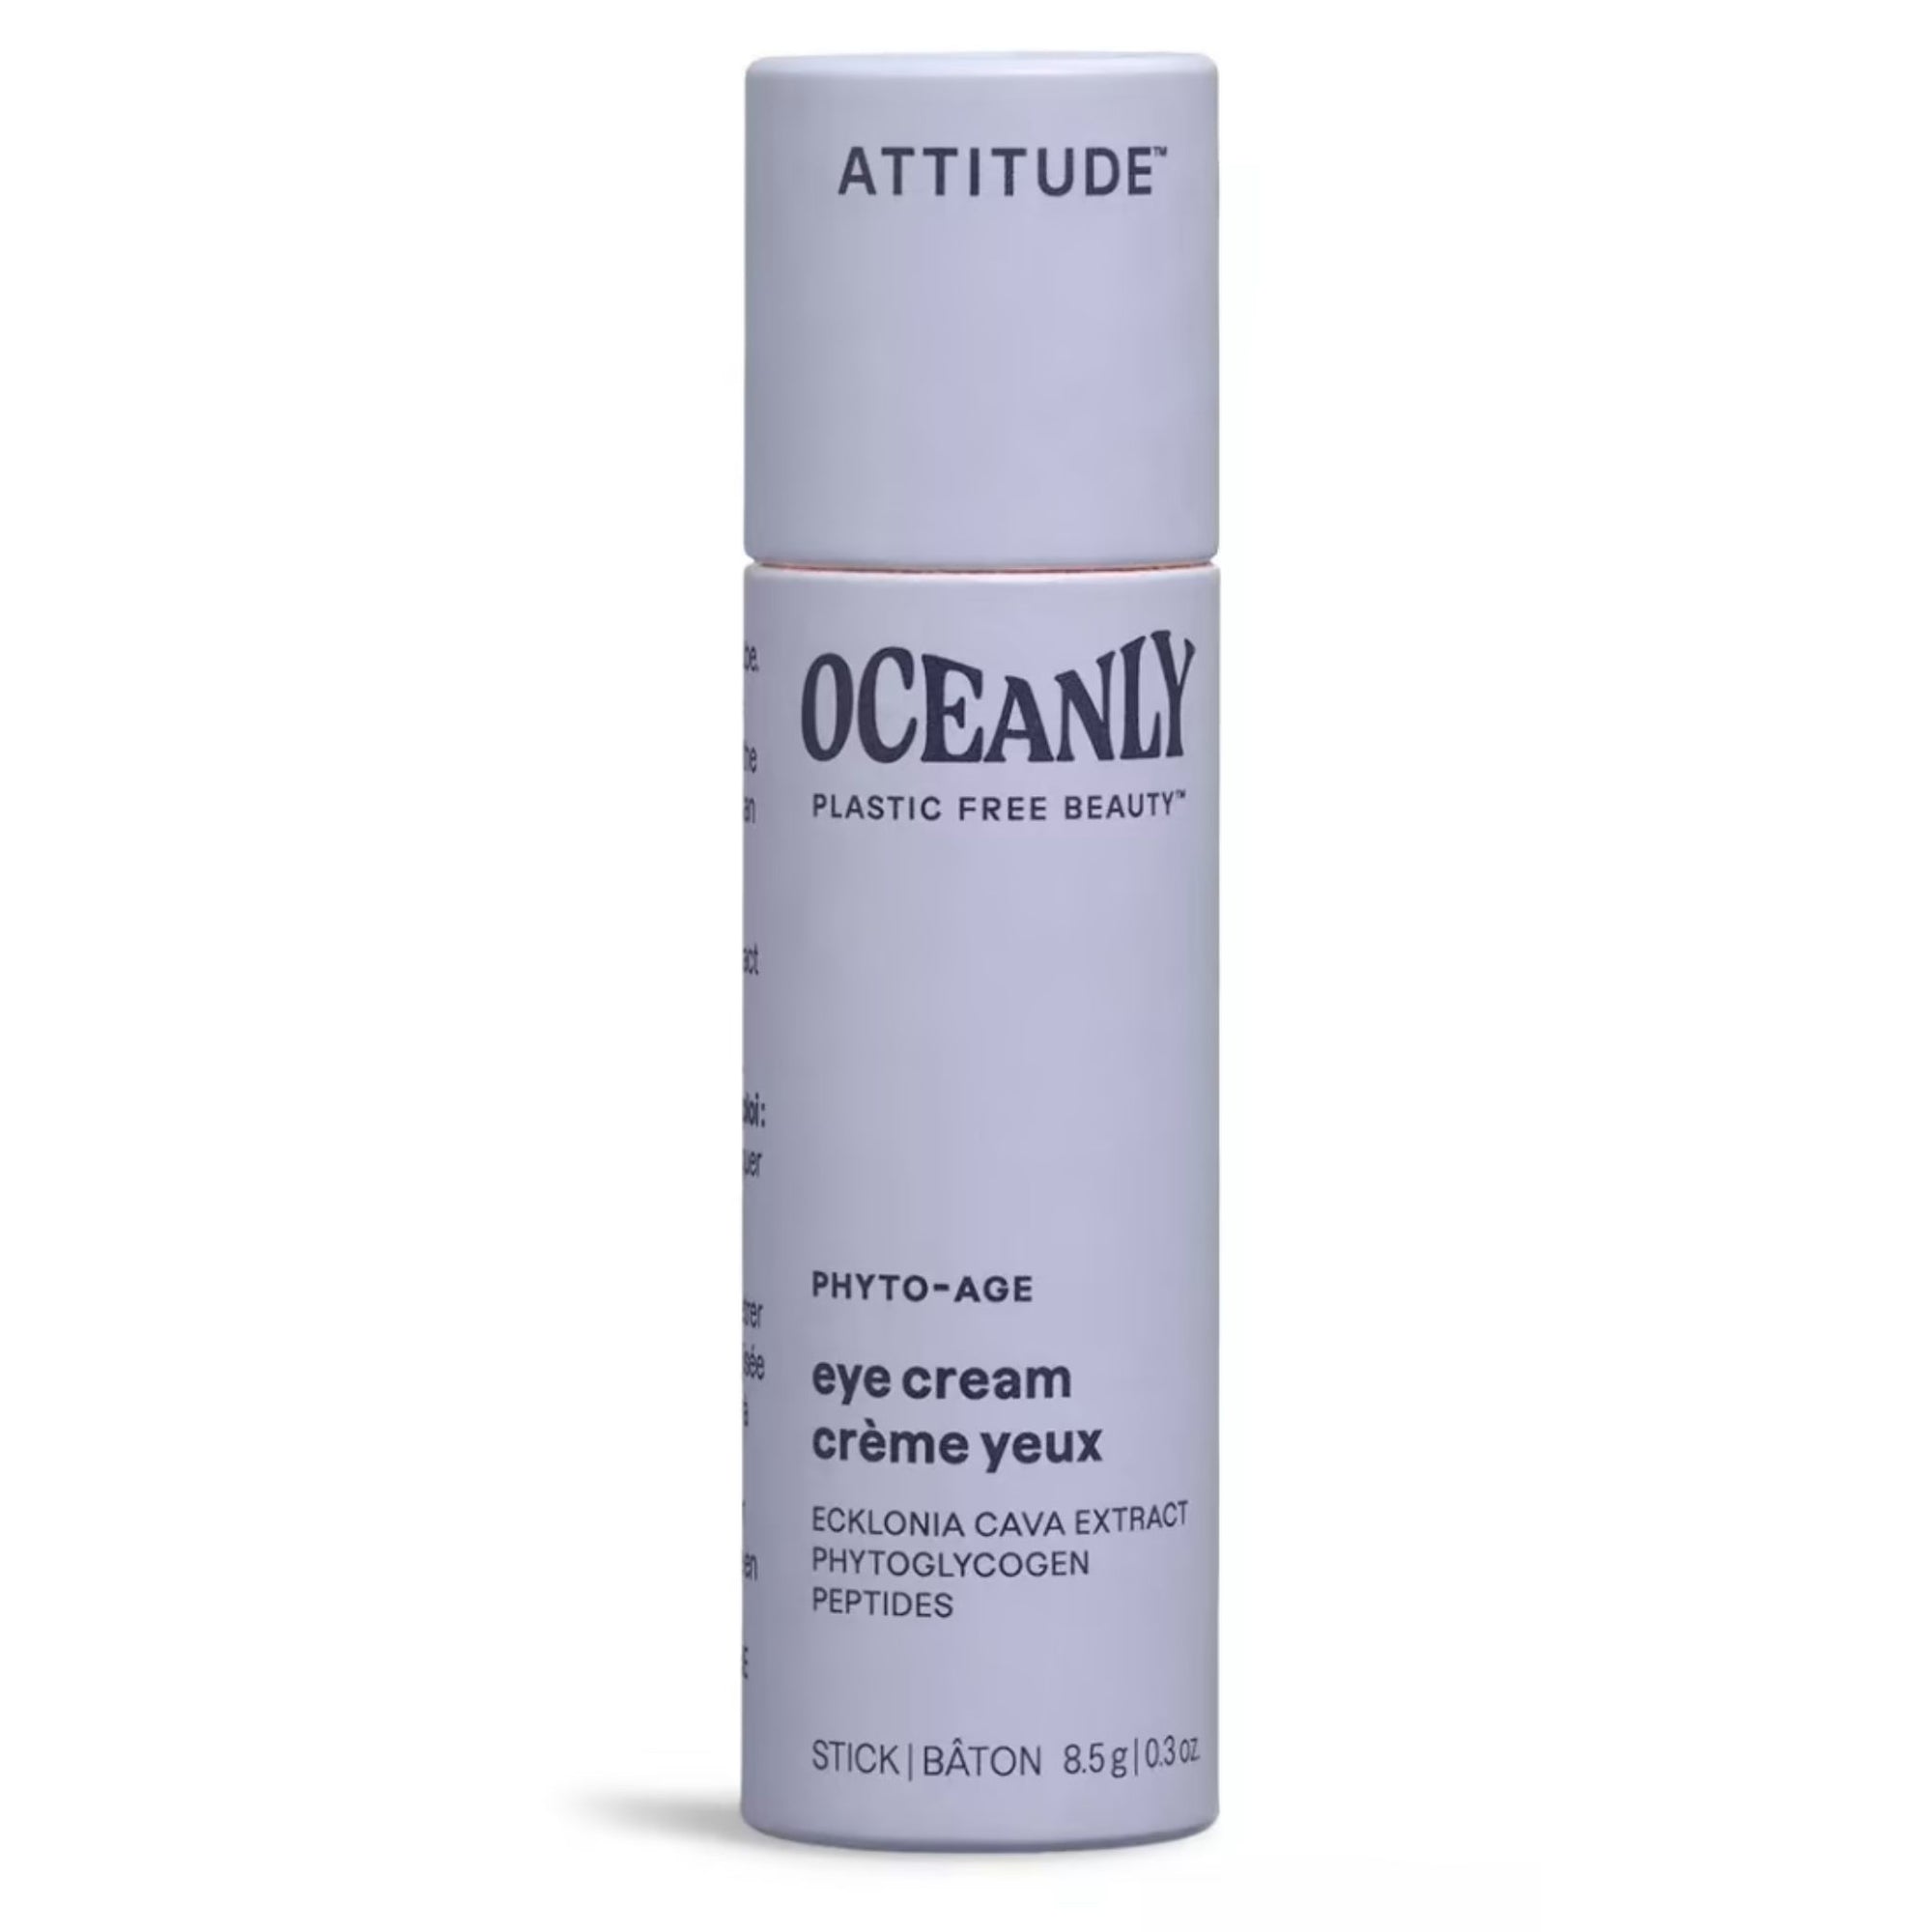 Oceanly Anti-Aging Solid Eye Cream 8.5g